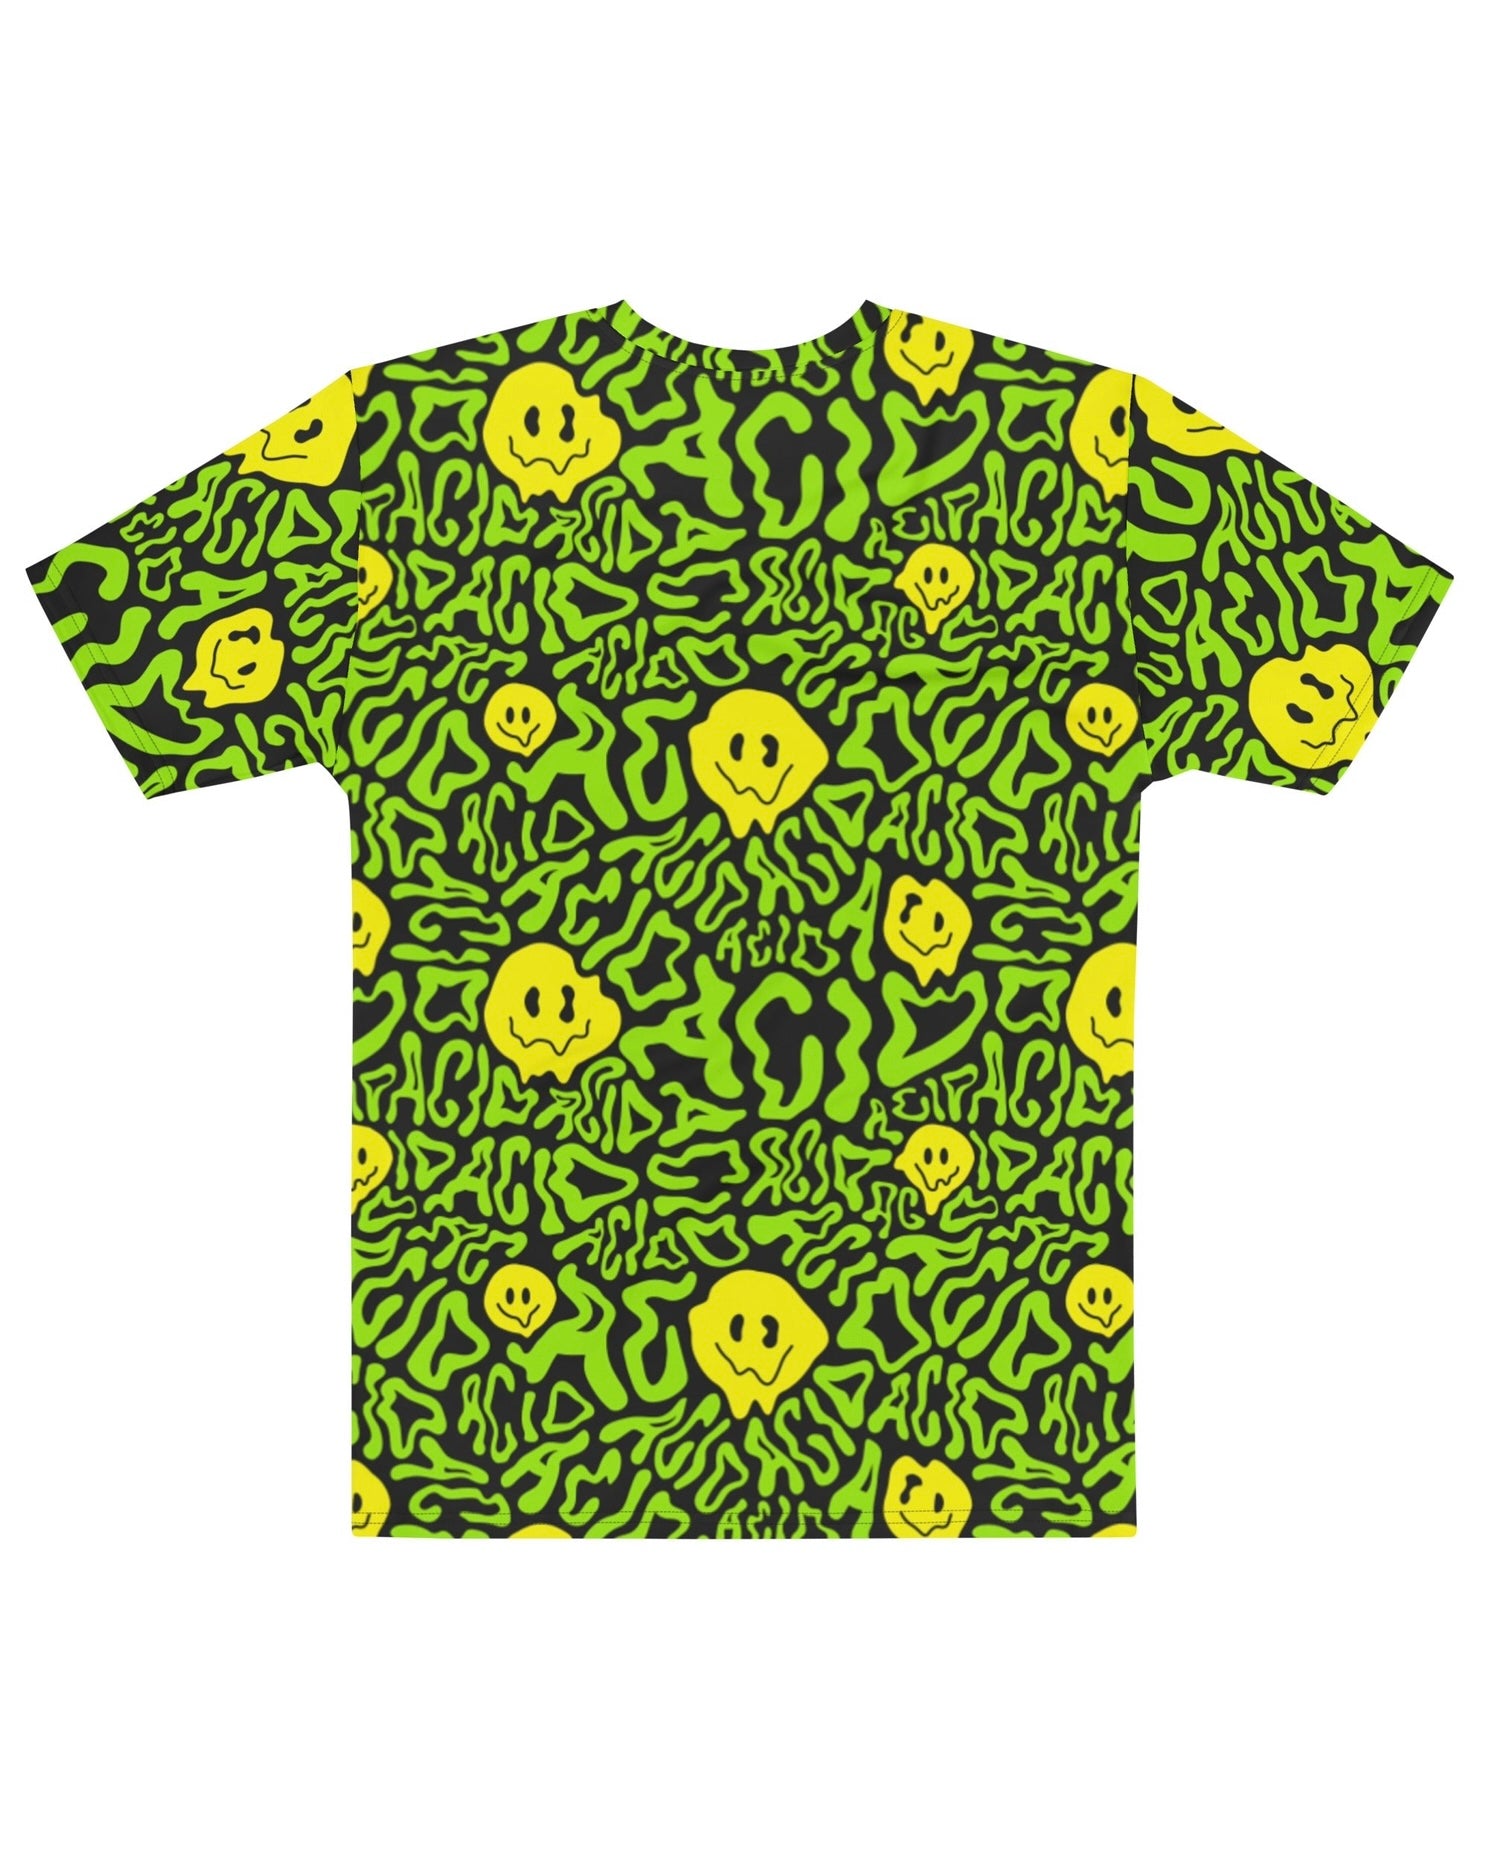 Acid Smilez T-Shirt, T-Shirt, - One Stop Rave